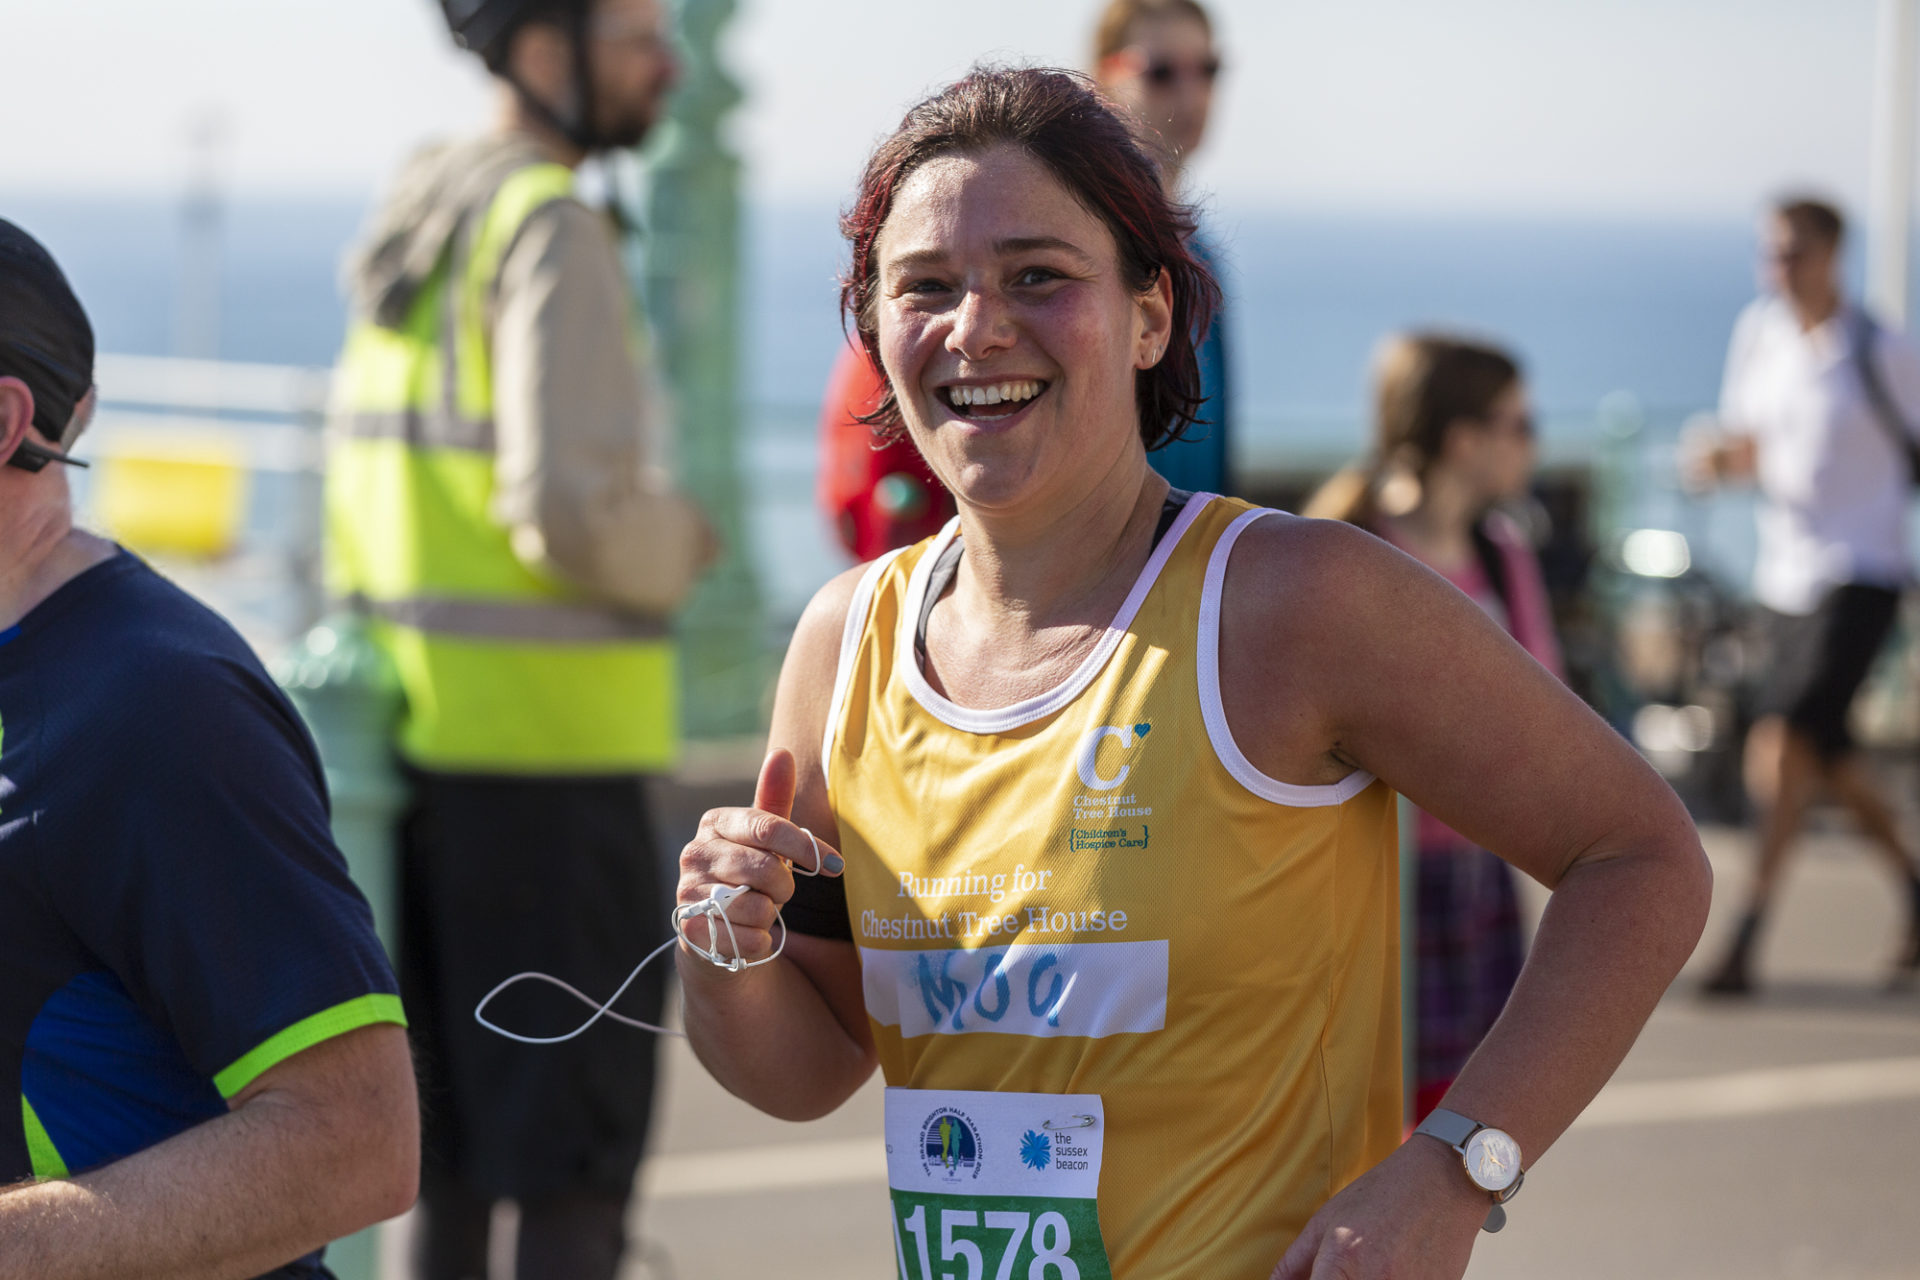 Runner at Brighton Half Marathon